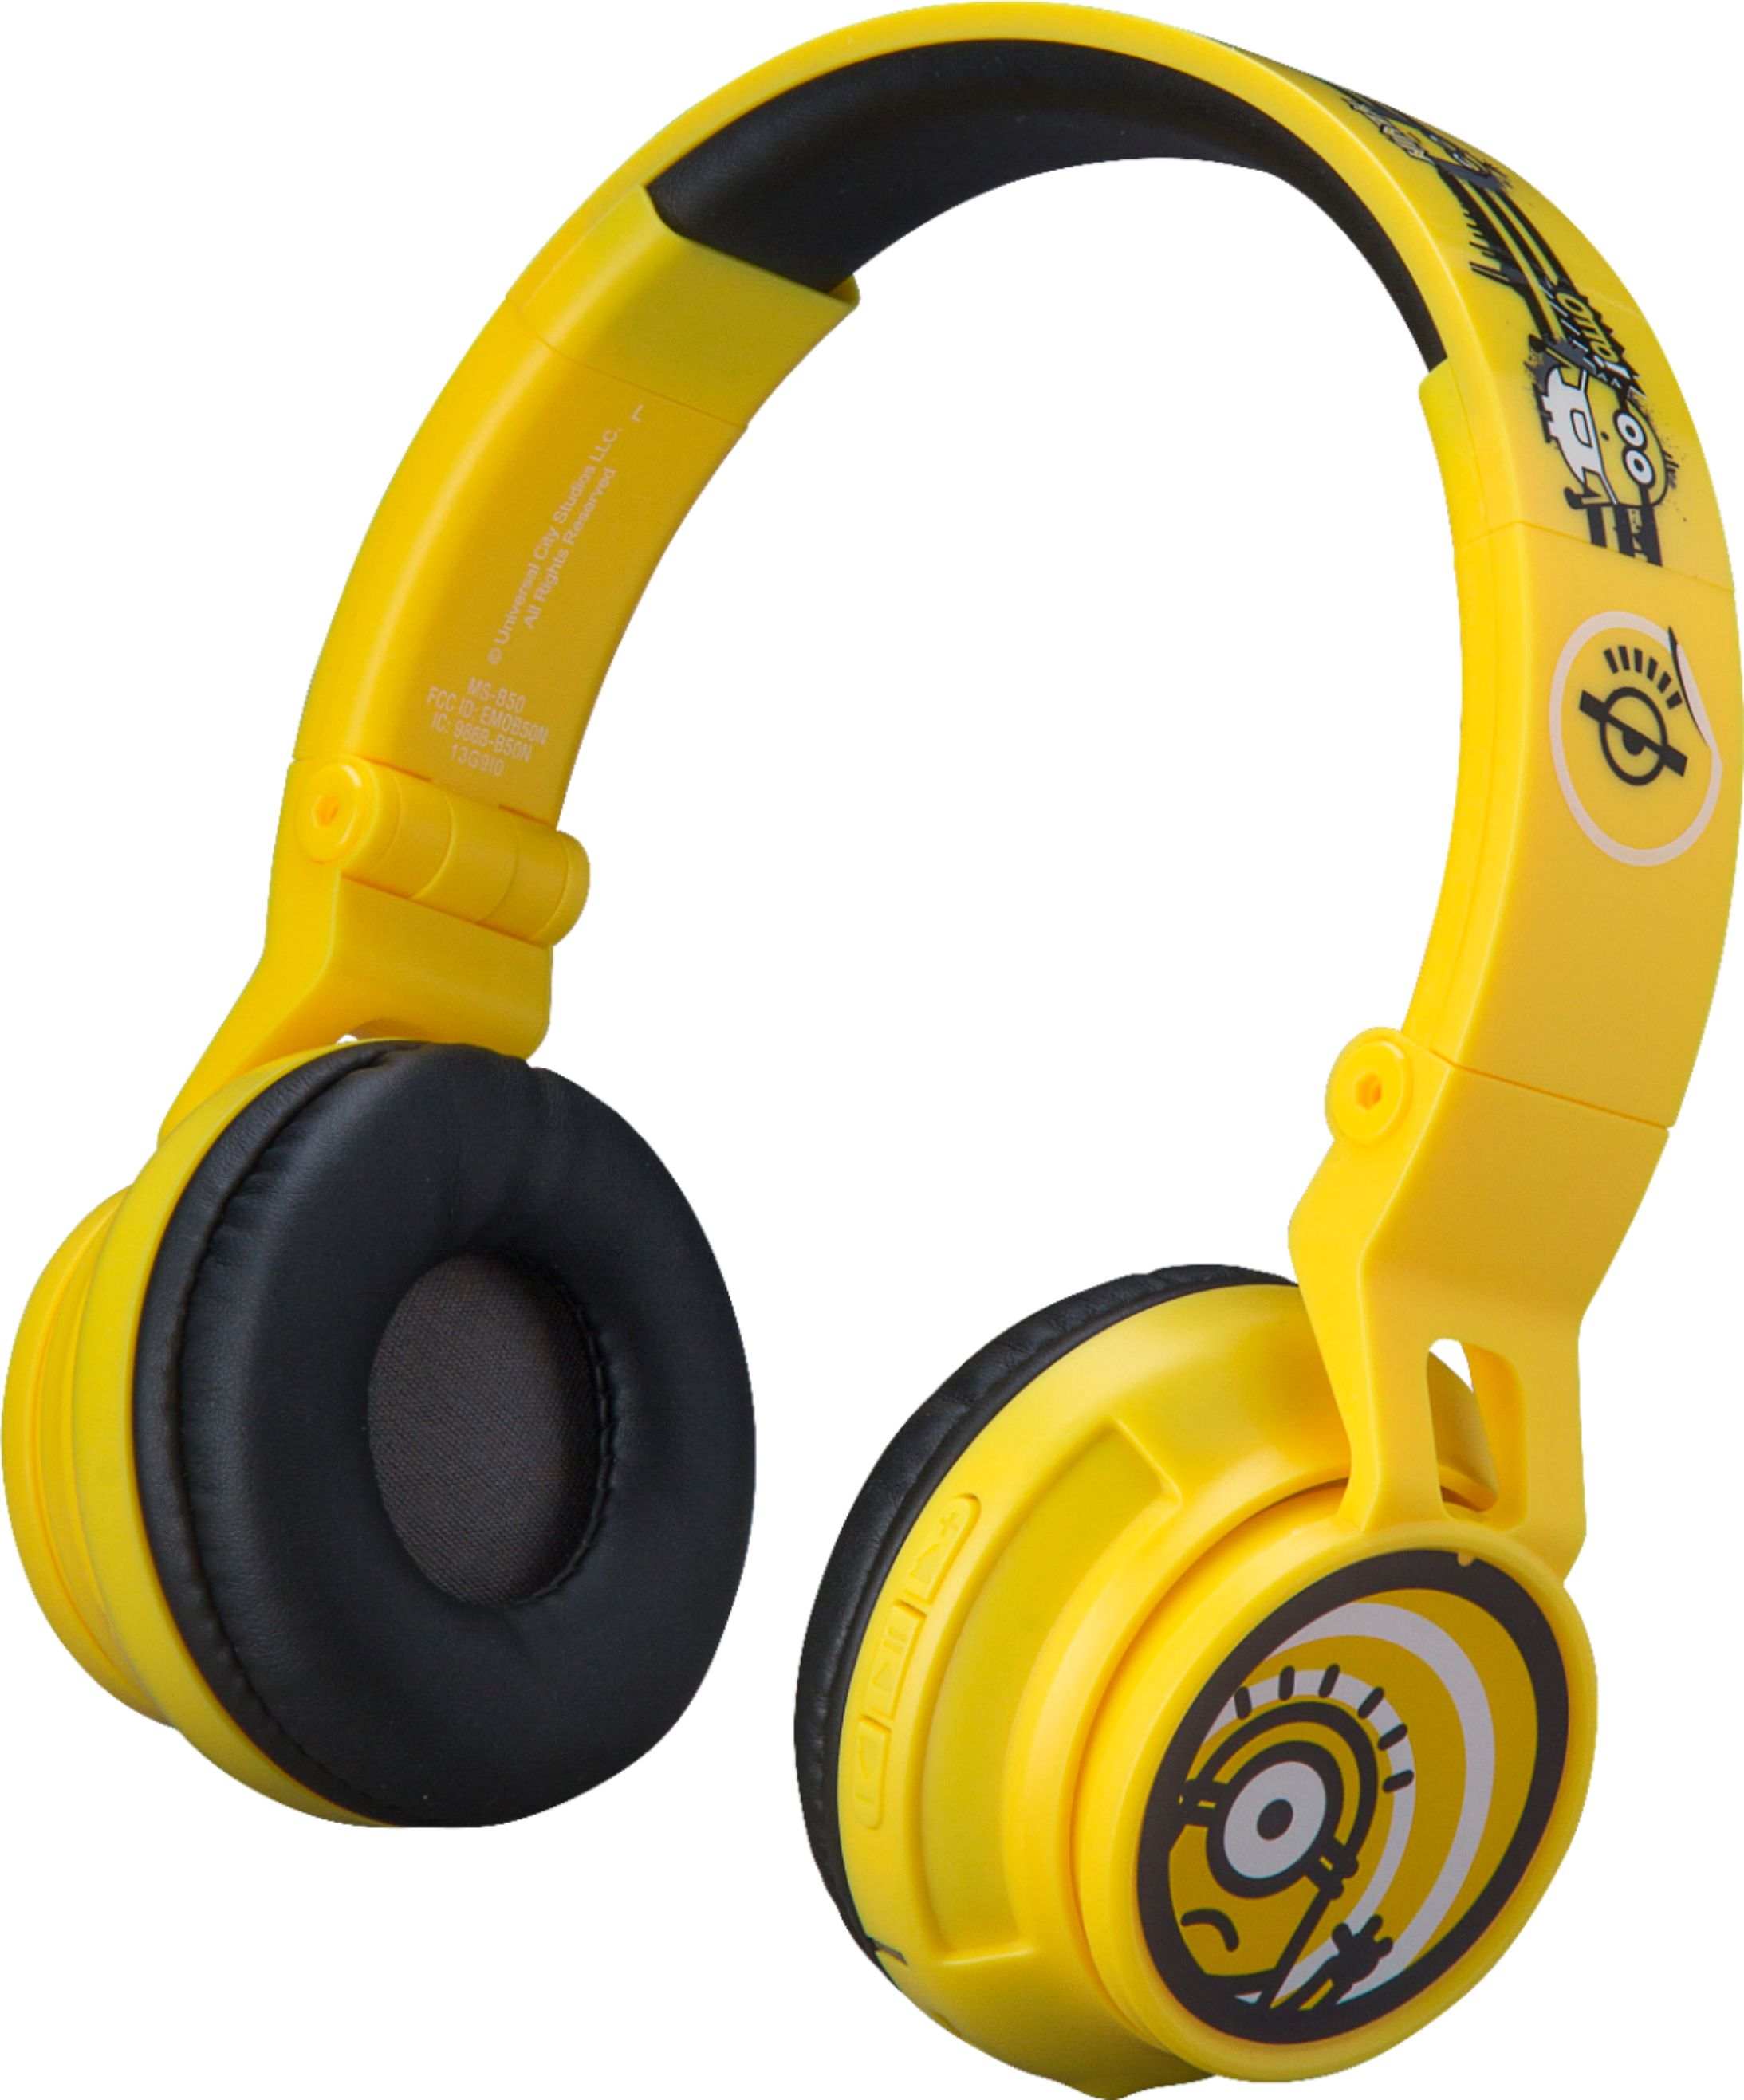 Left View: eKids - Minions 2 Wireless Over-the-Ear Headphones - Yellow/Black